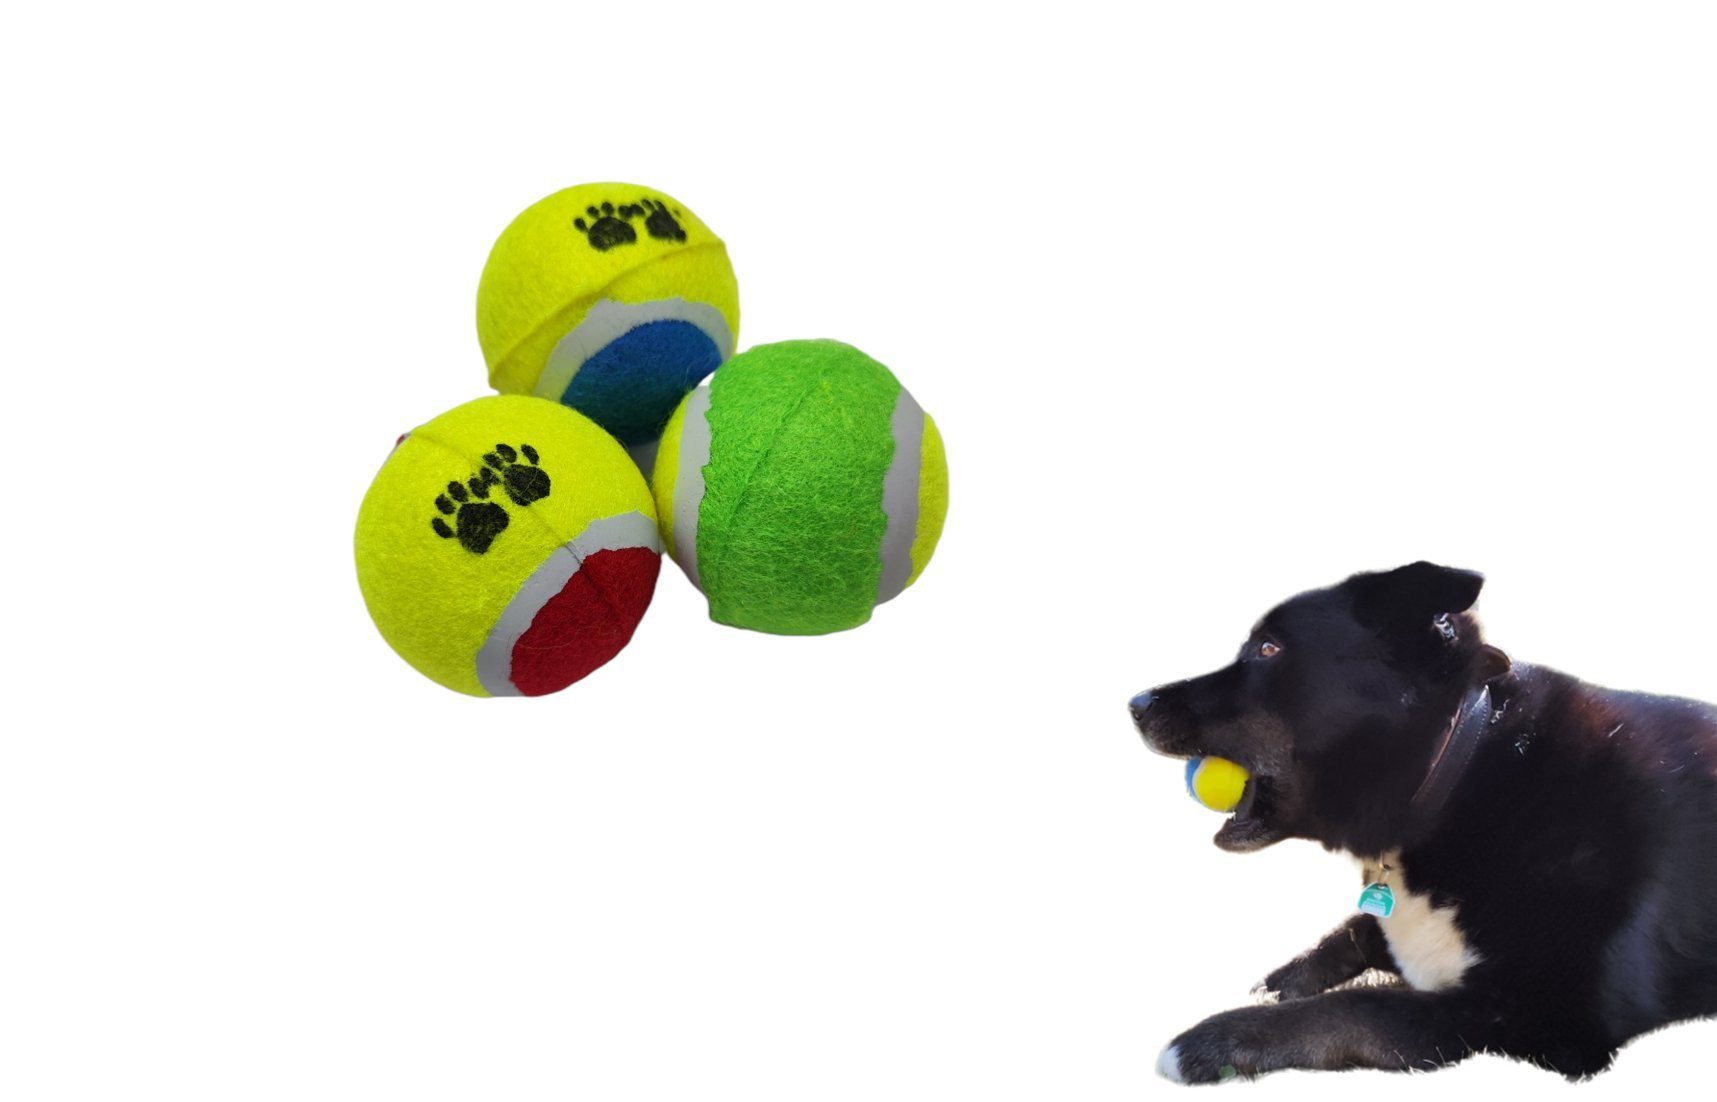 HMH-Shop Tierball Hundebälle bunt Hundespielzeug Haustier Katze Ball Spielen Hund Tennisball Dog Toys Hundeball Spaß Agility Training Ausdauer auspowern Tennisbälle Ø ~6,5cm Helle Farben gut auffindbar, Helle Farben, gut auffindbar 9 Bälle | Bälle